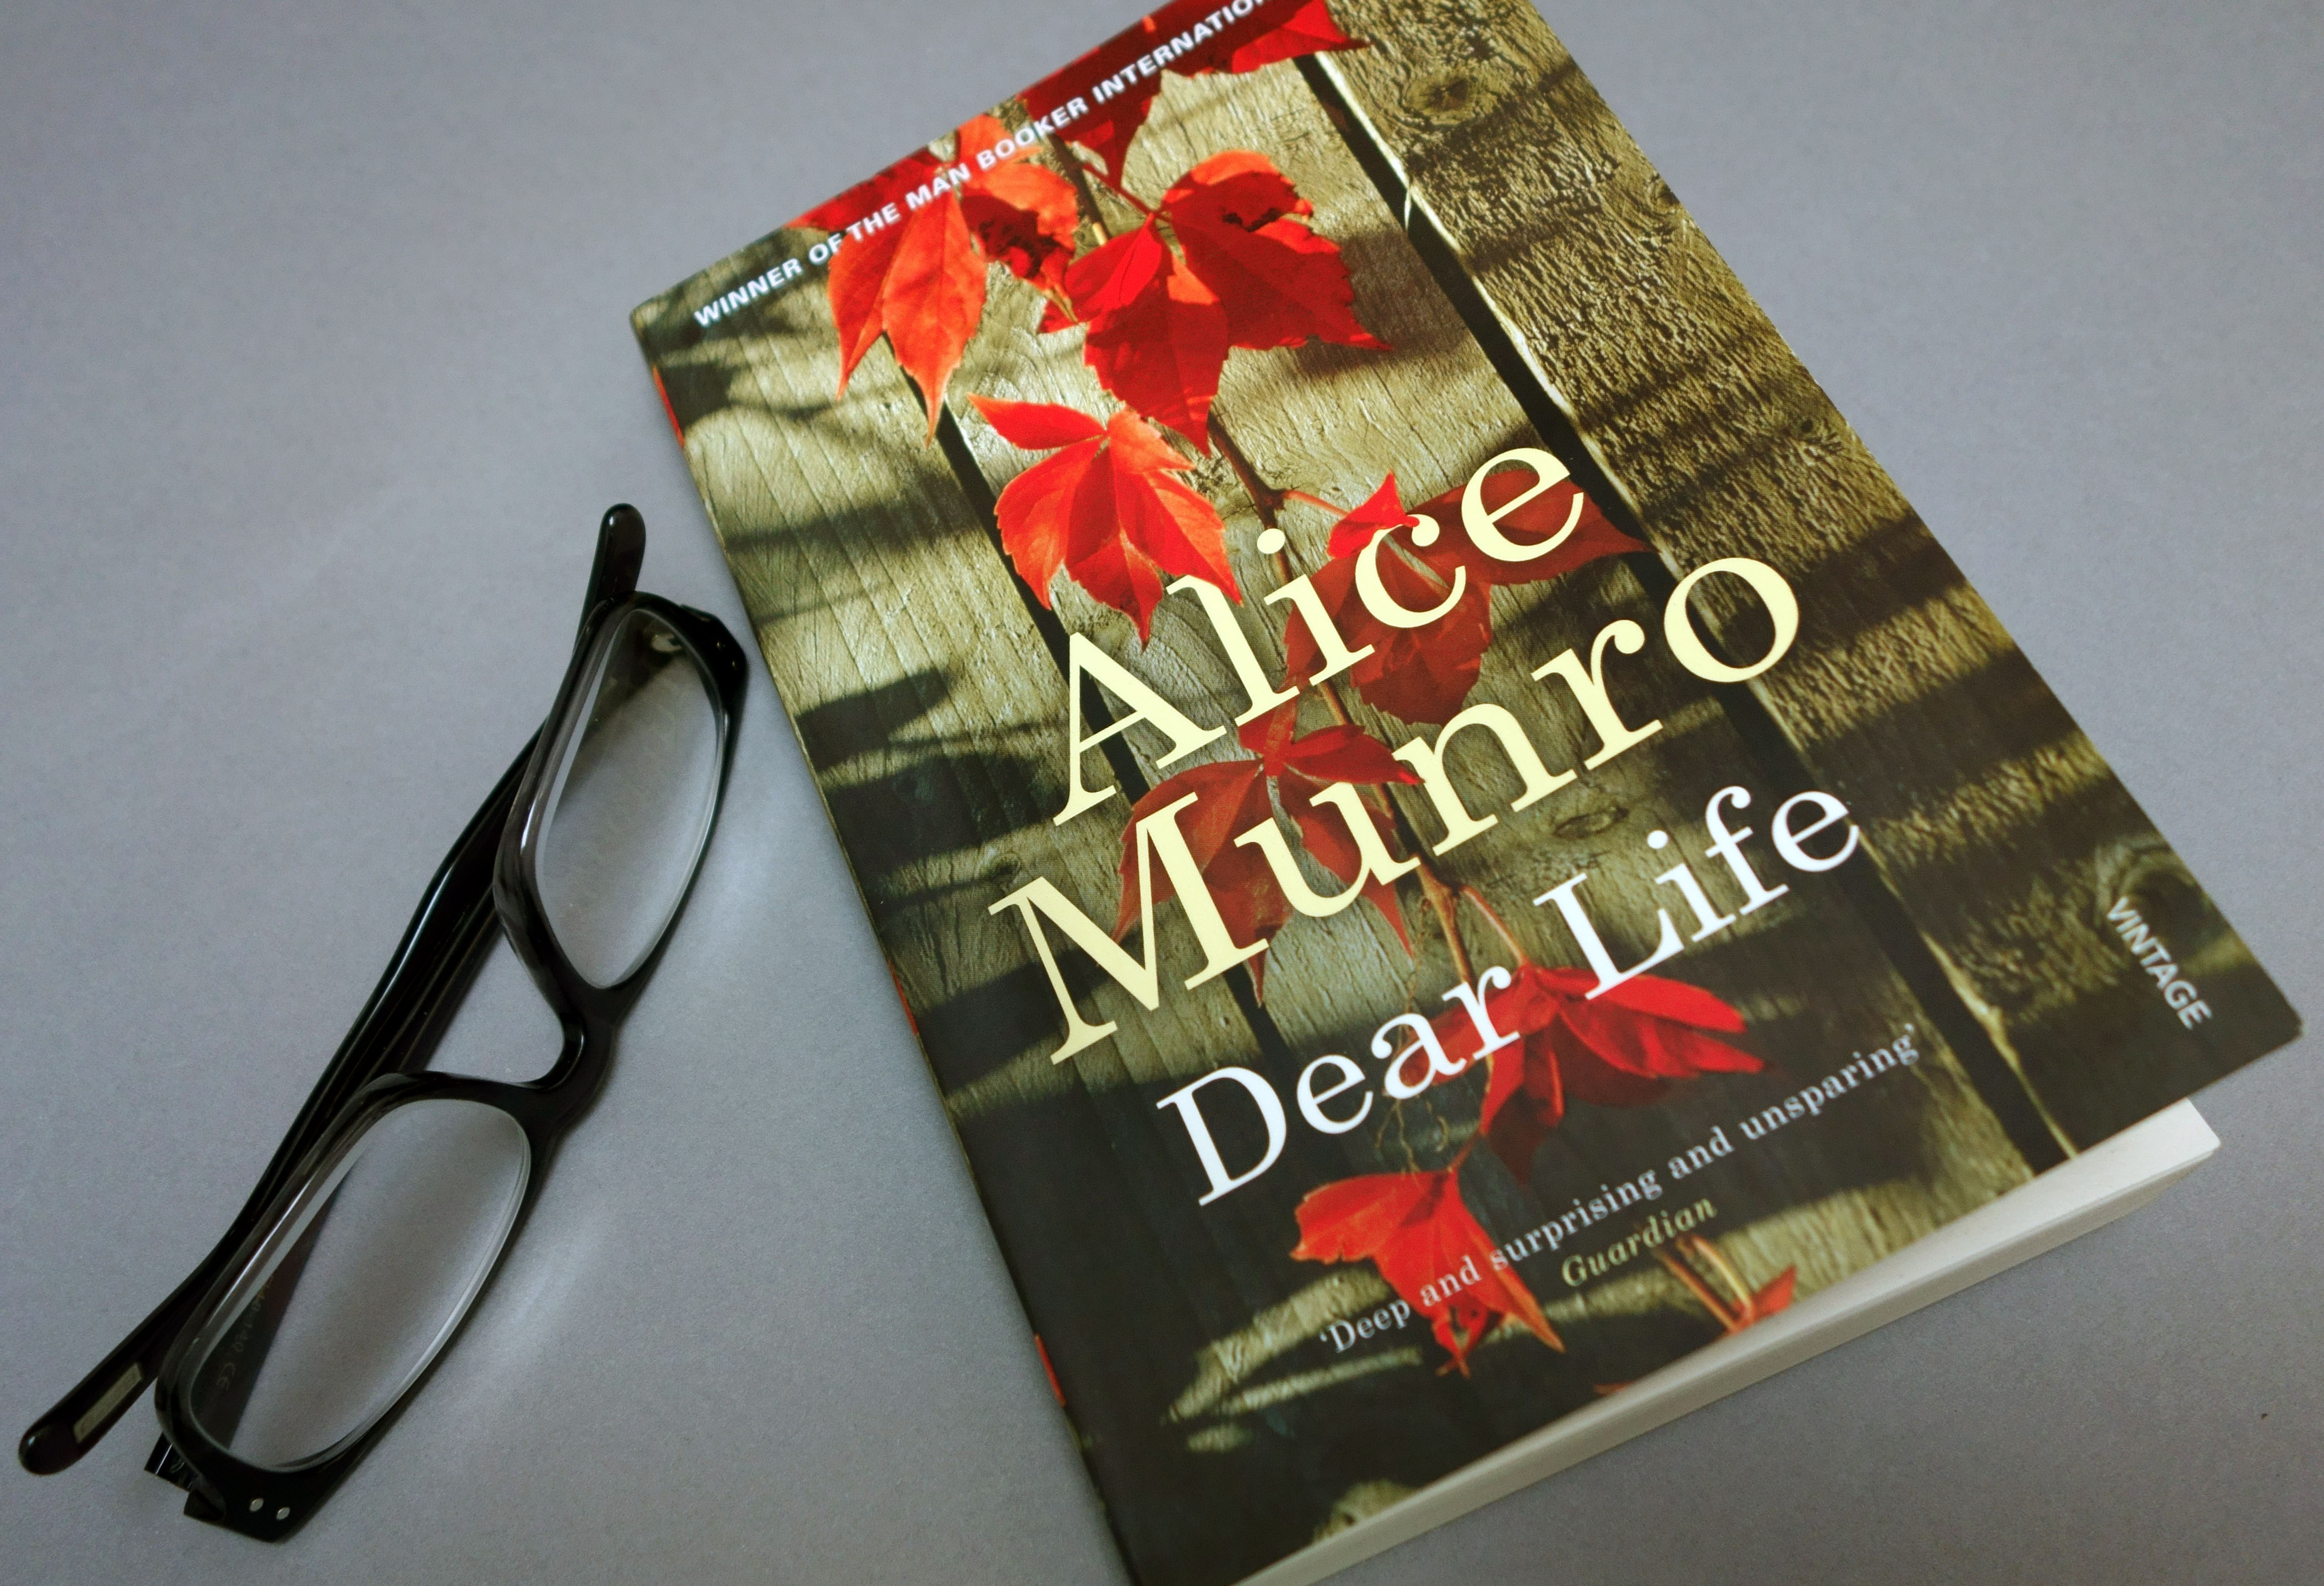 Canadian writer Alice Munro's Dear Life